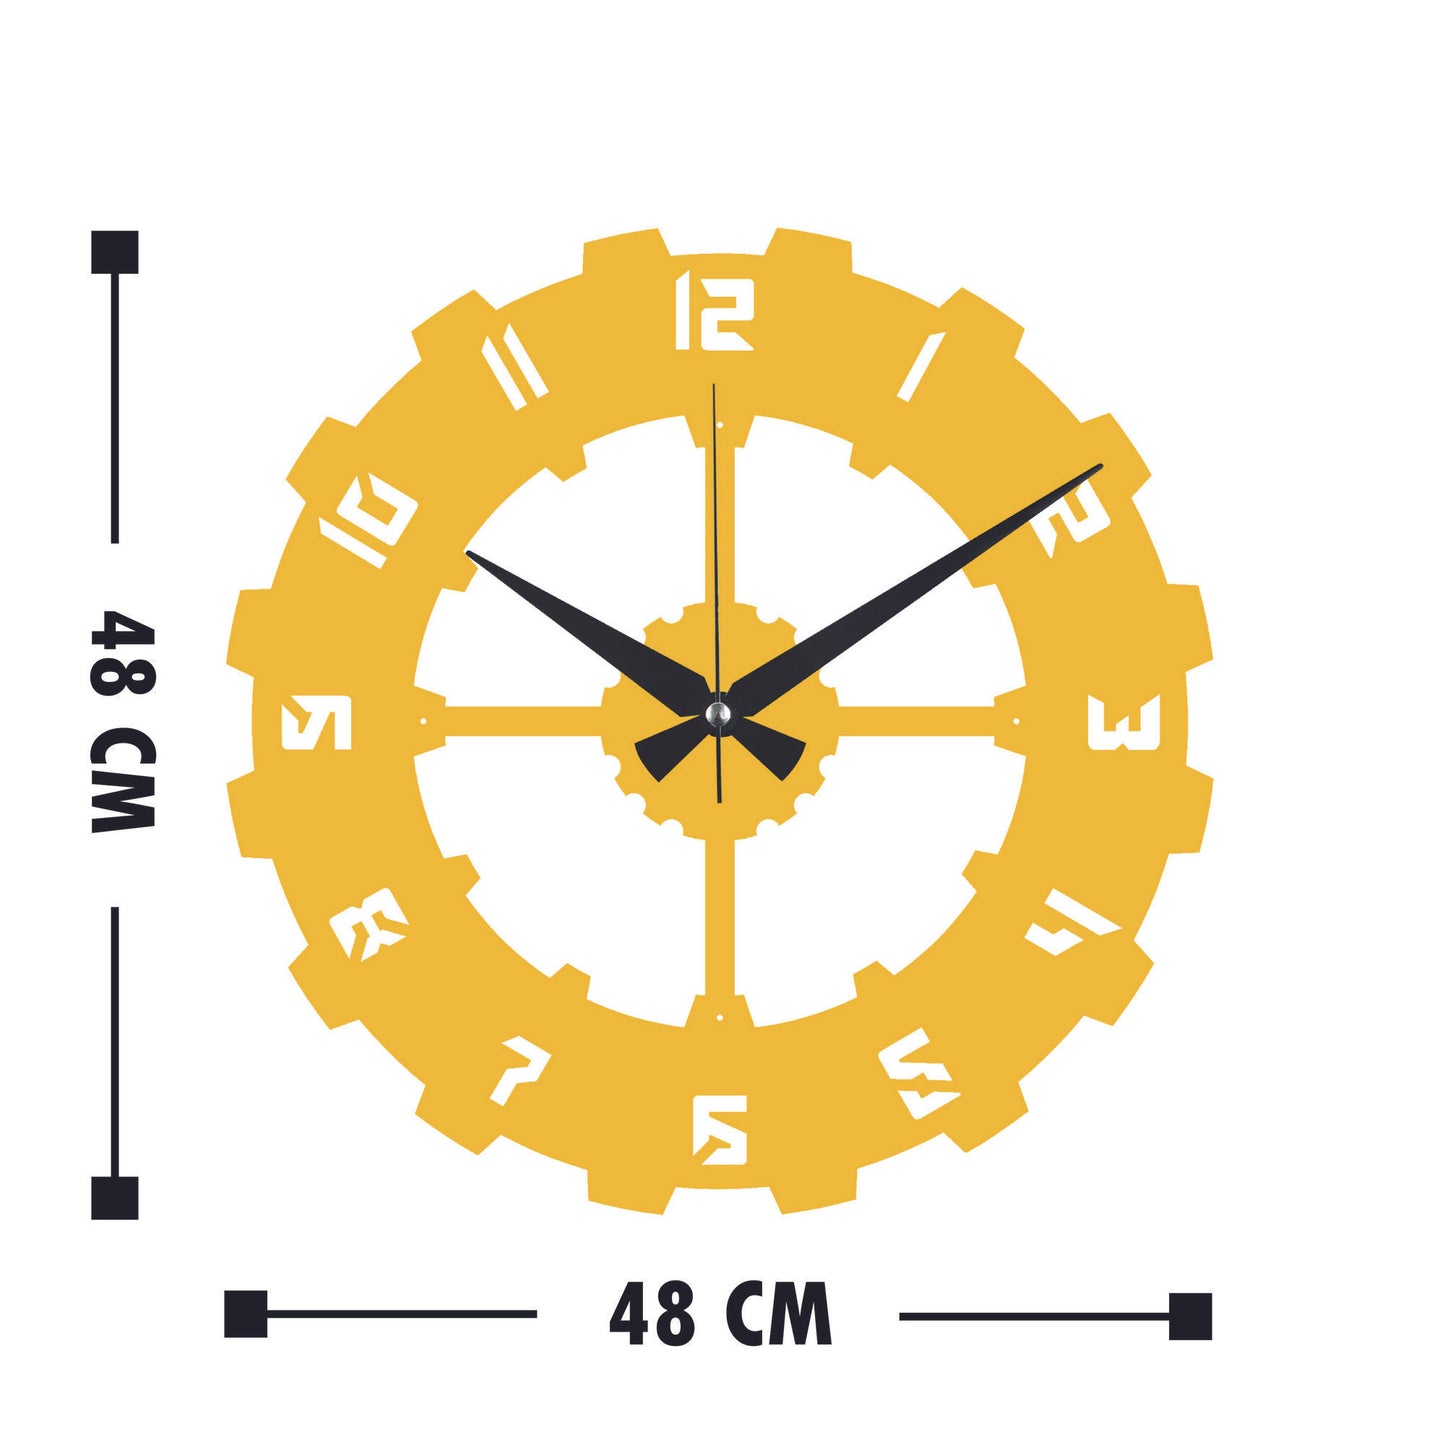 Metal Wall Clock 4 - Gold - Decorative Metal Wall Clock